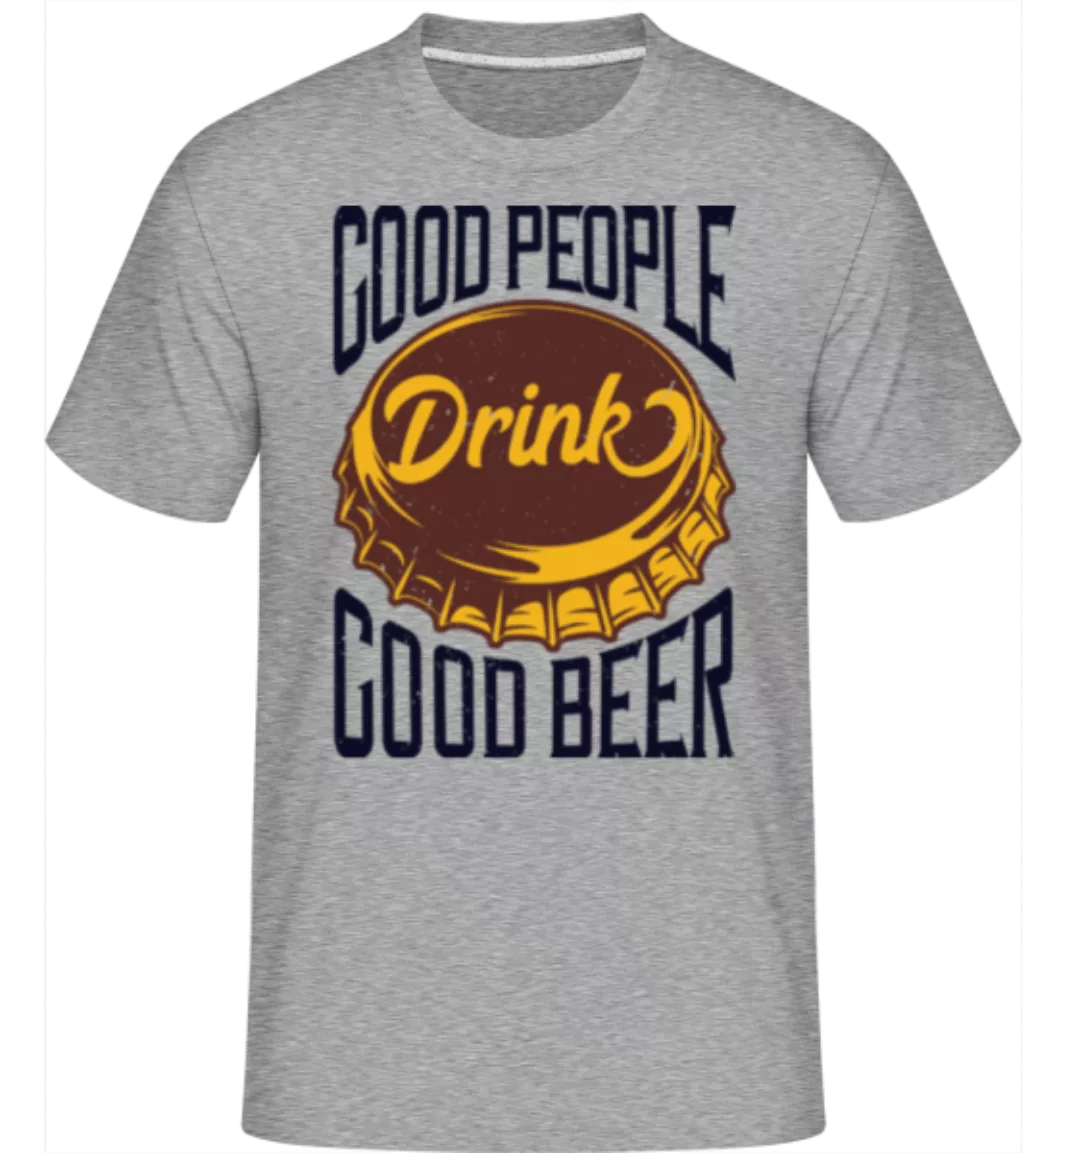 Drink Good Beer · Shirtinator Männer T-Shirt günstig online kaufen